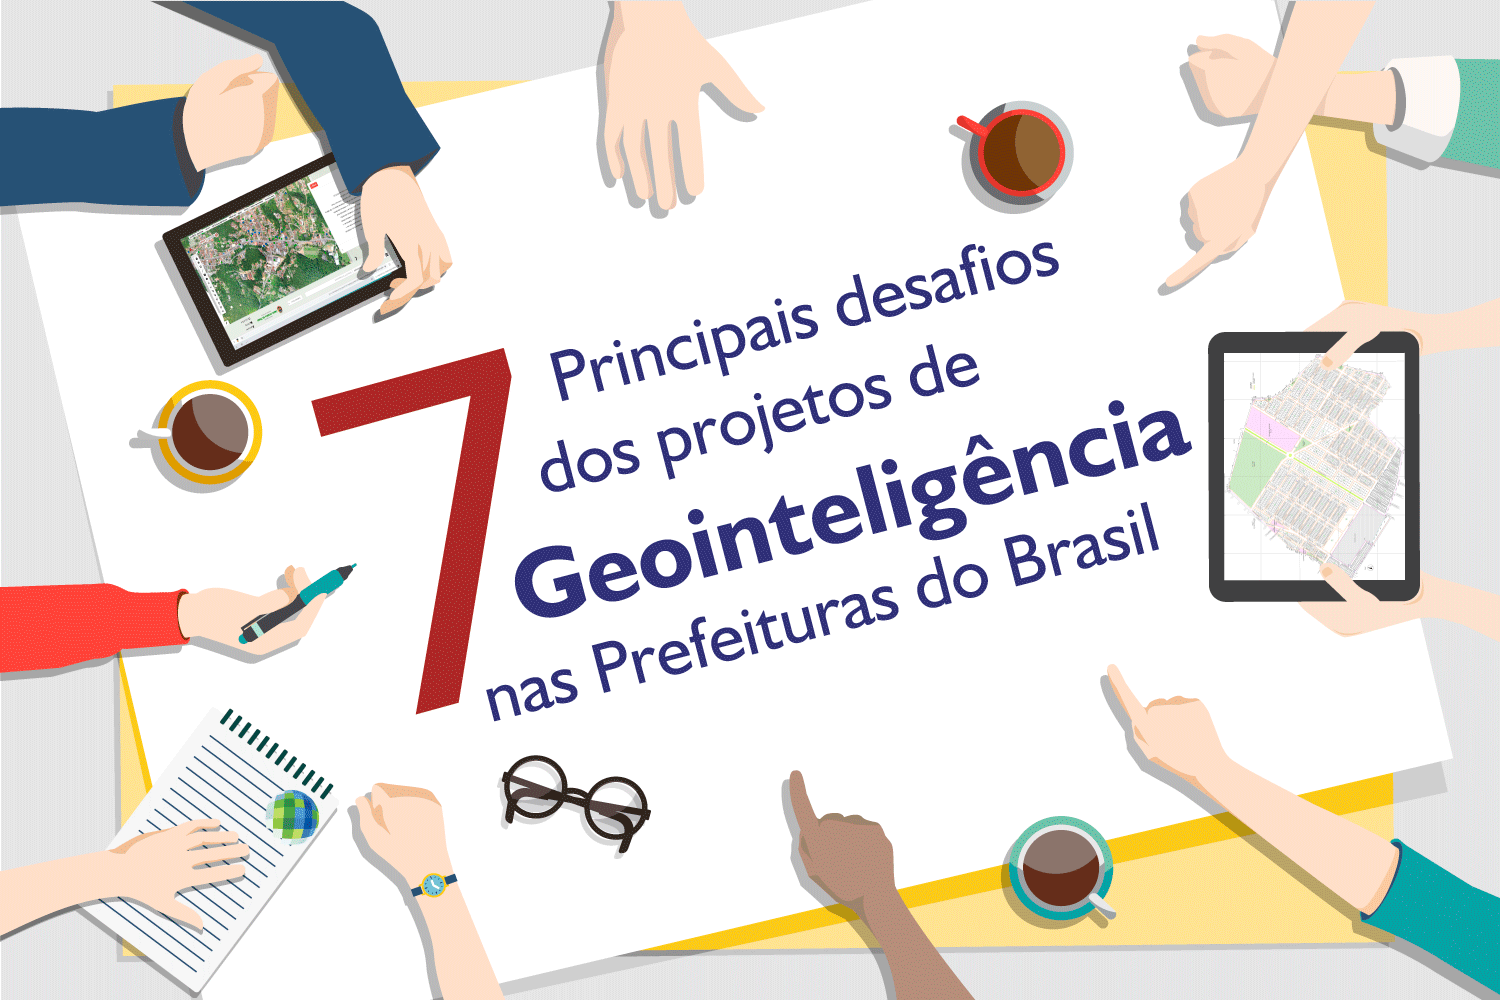 7 Principais desafios dos projetos de Geointeligência nas prefeituras do Brasil